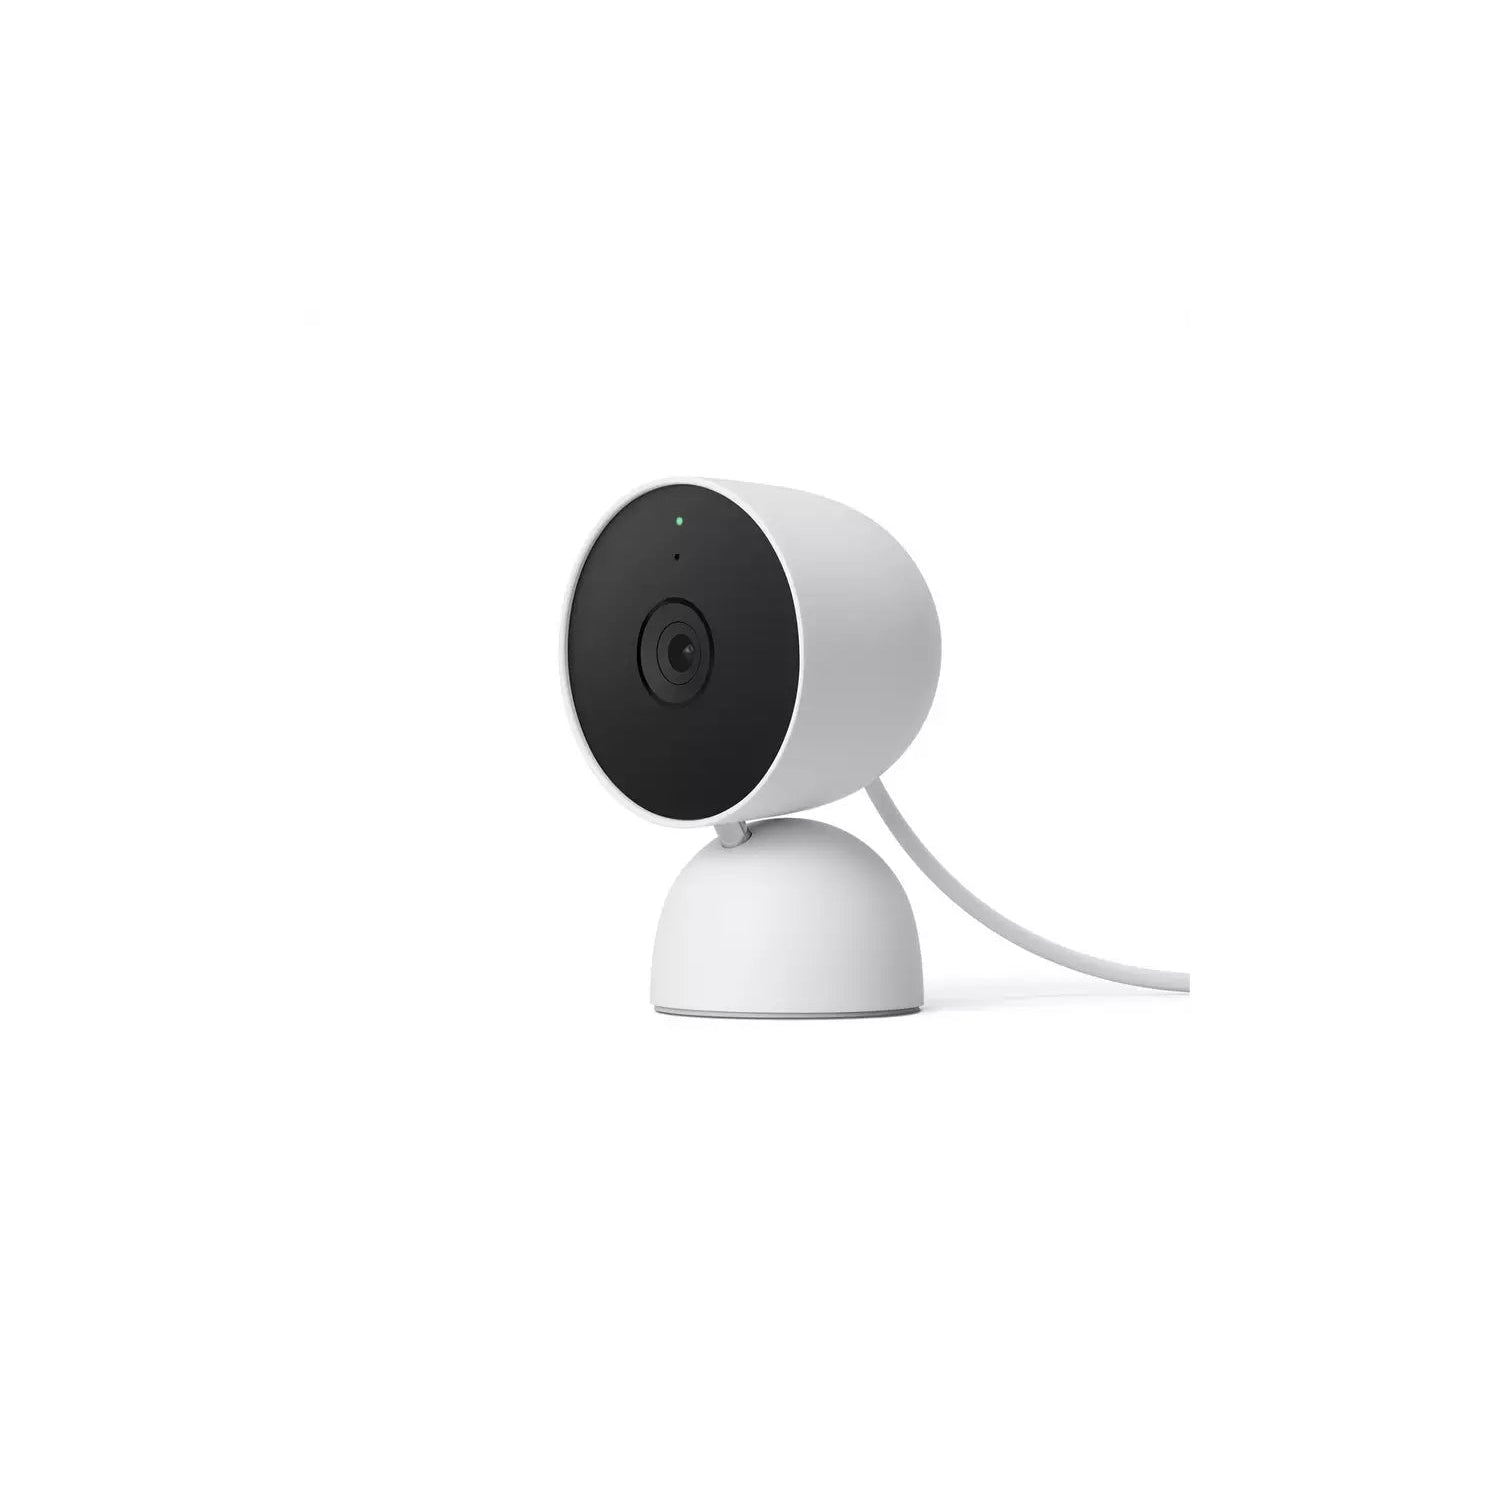 Google Nest Cam Indoor Security Camera Full HD 1080p - White - Refurbished Pristine